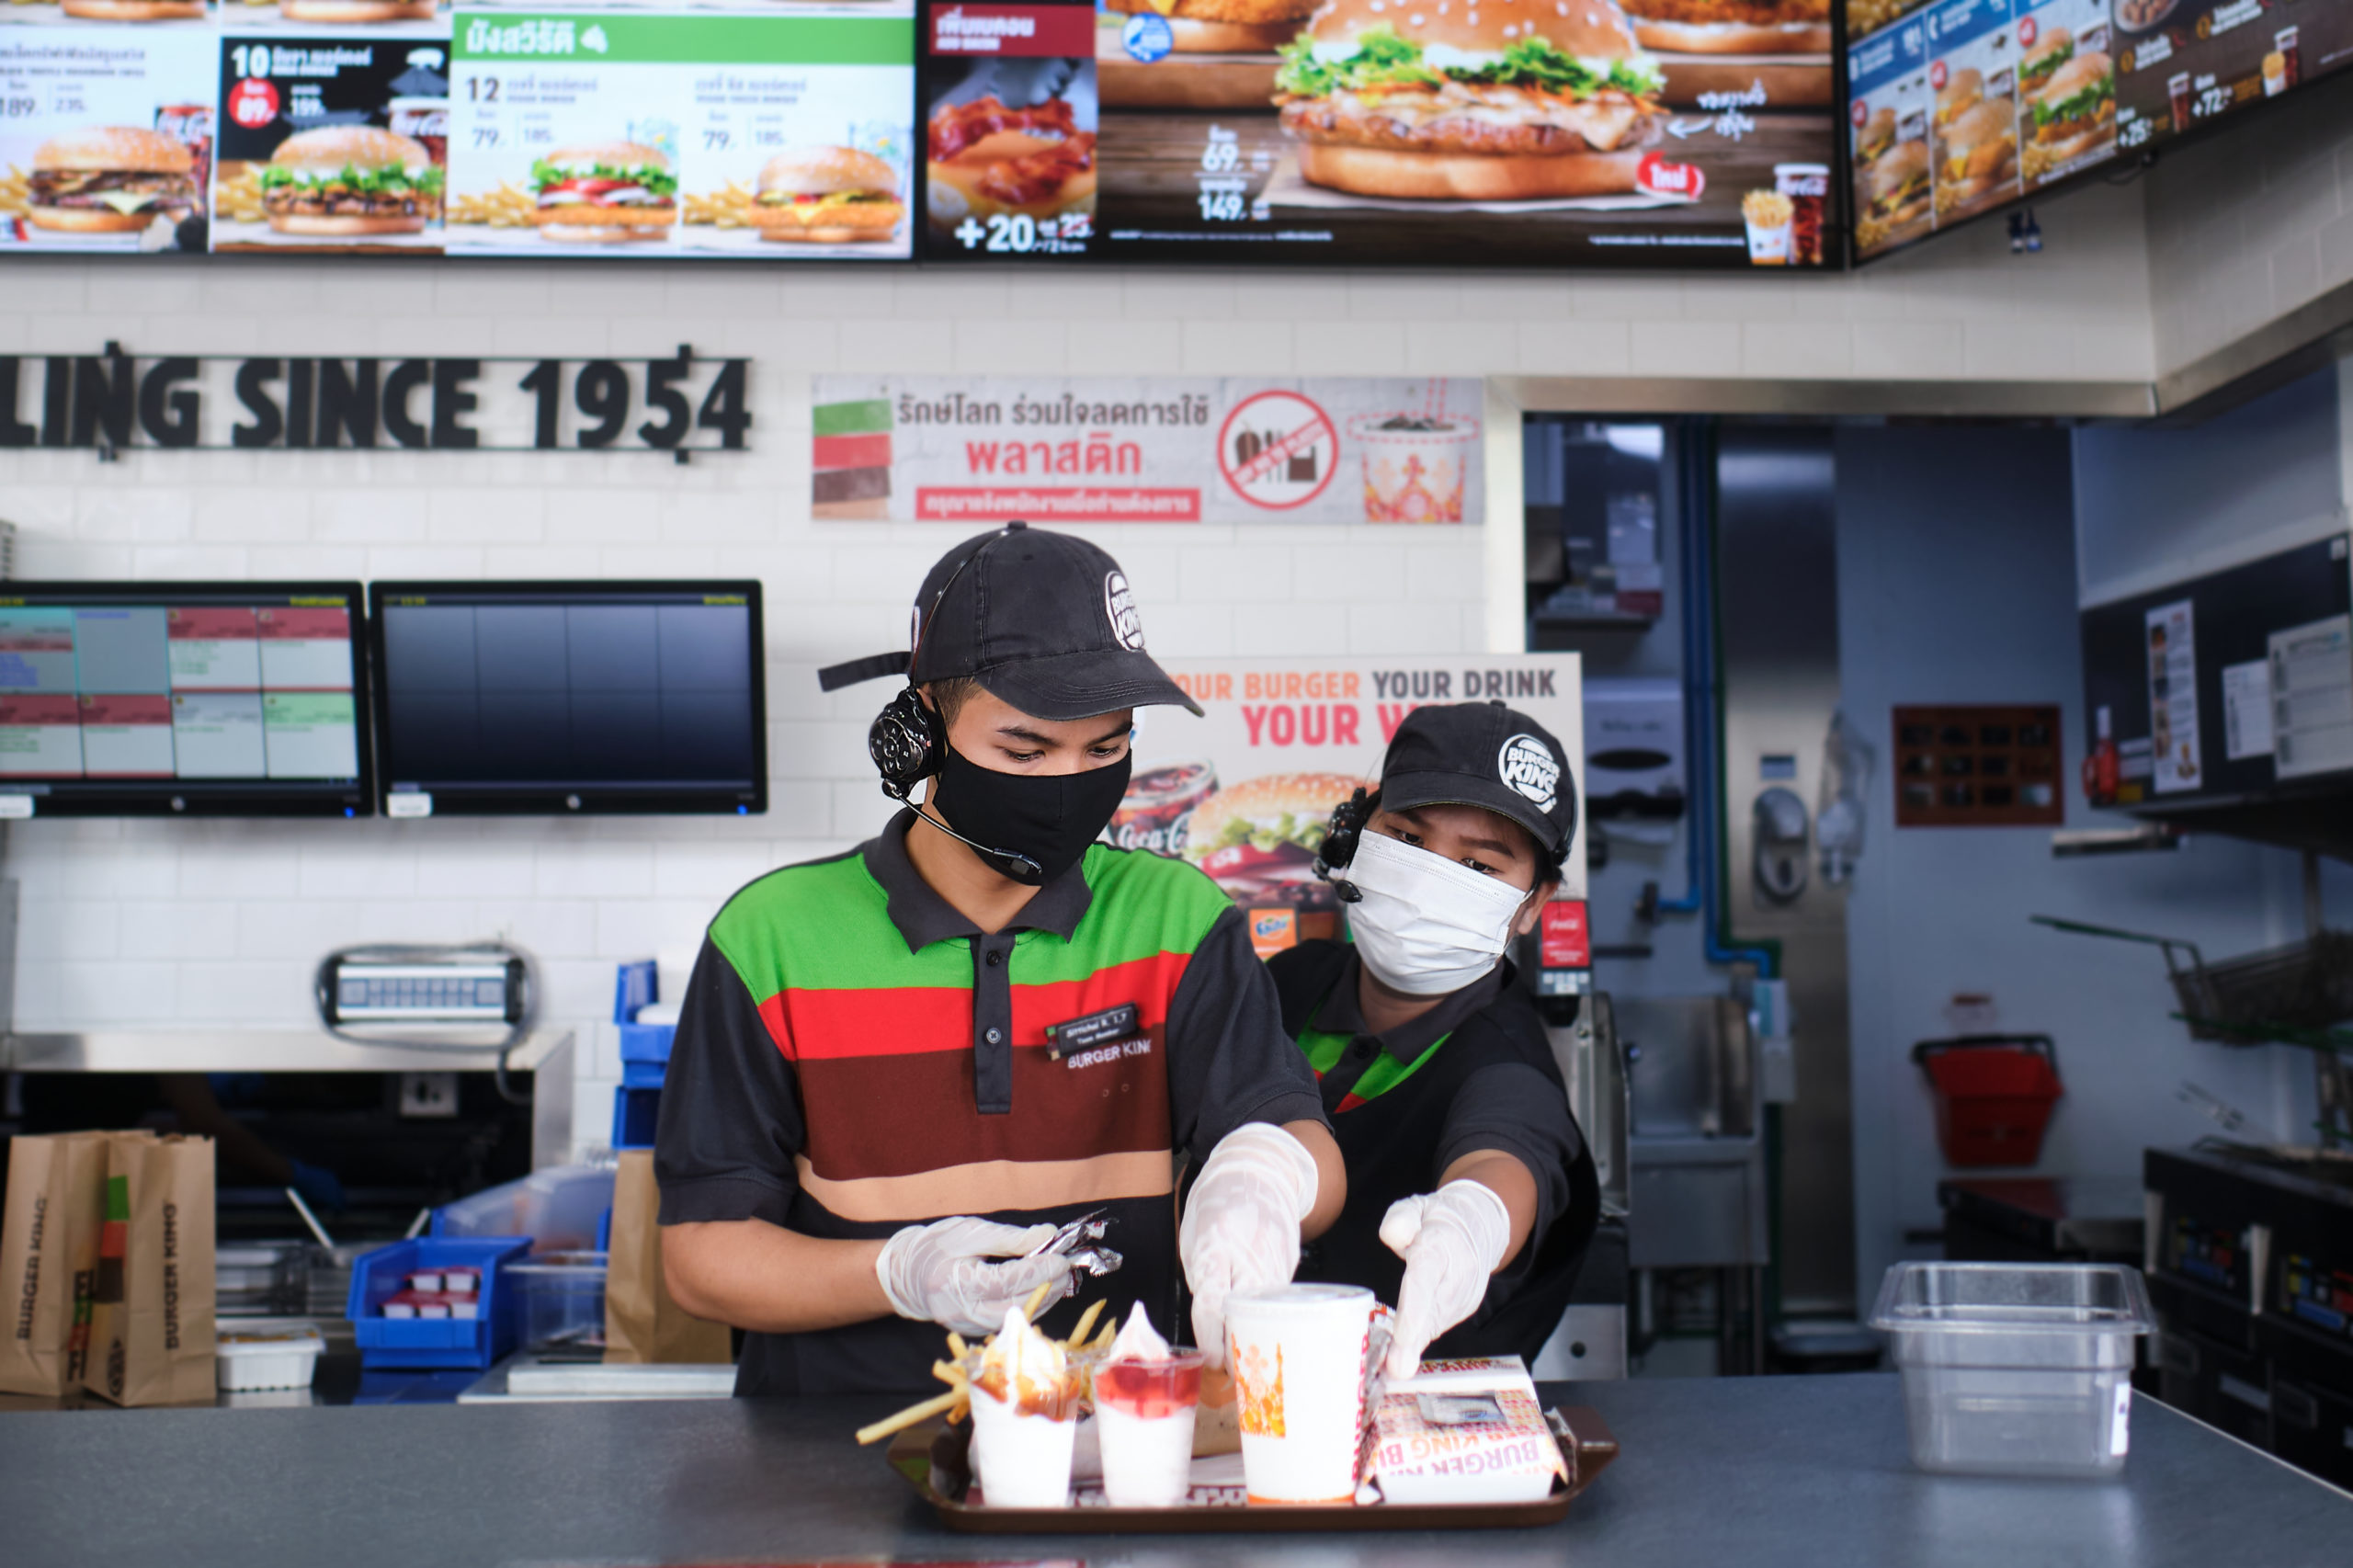 Burger King abre restaurante em ambiente virtual